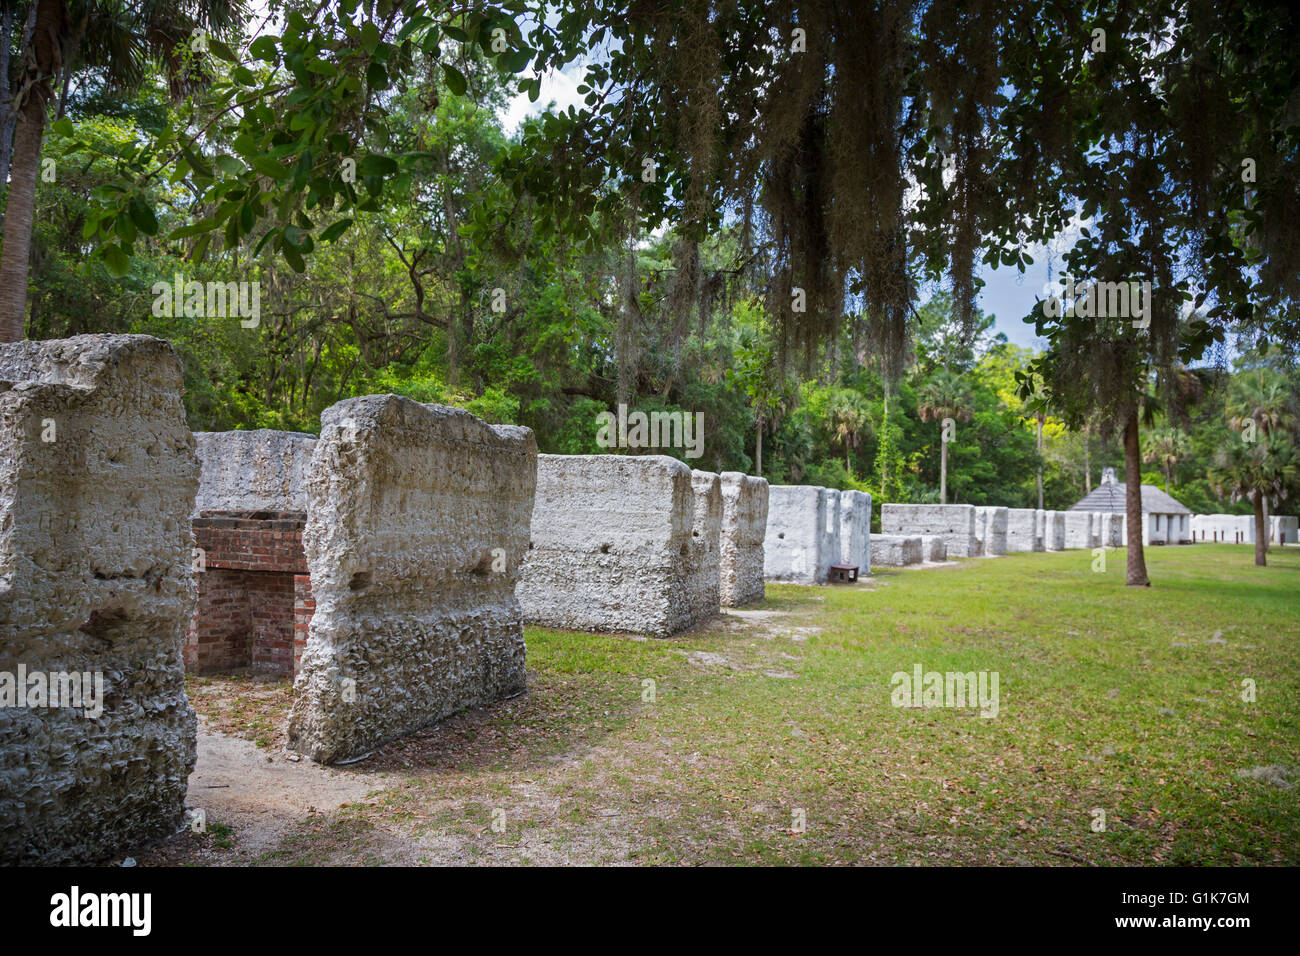 Jacksonville, Florida - The remains of slave quarters at Kingsley Plantation. Stock Photo